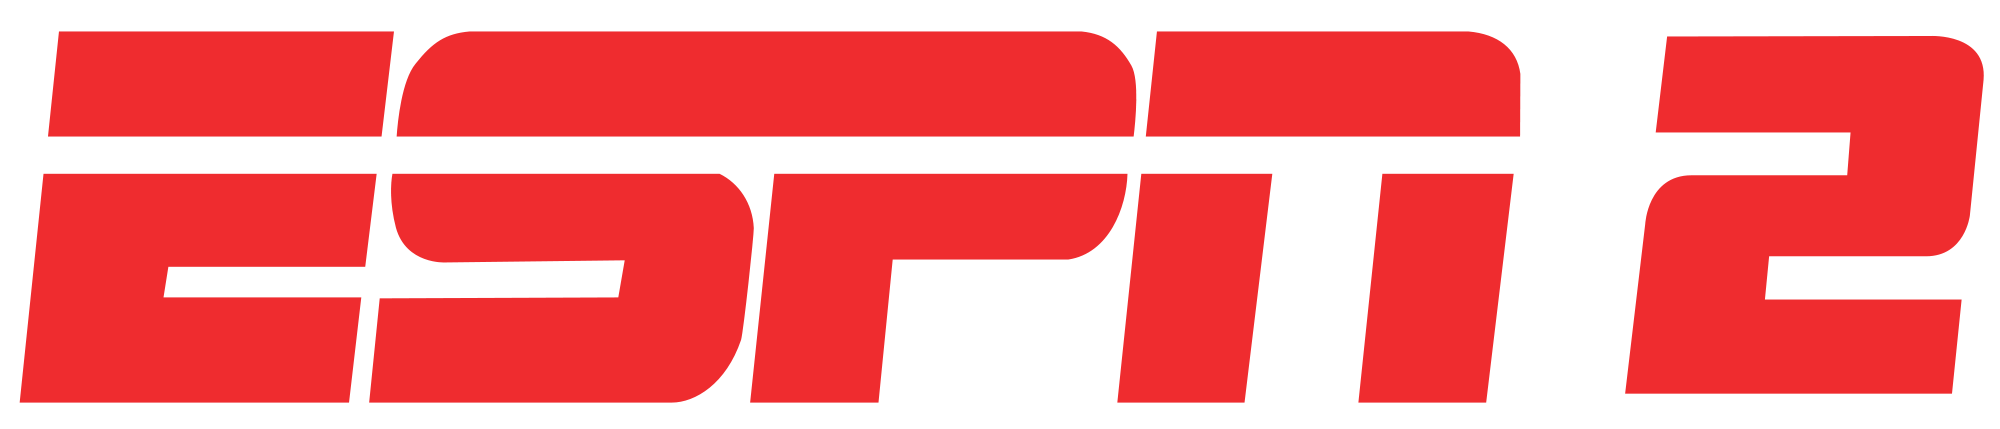 espn2 channel logo